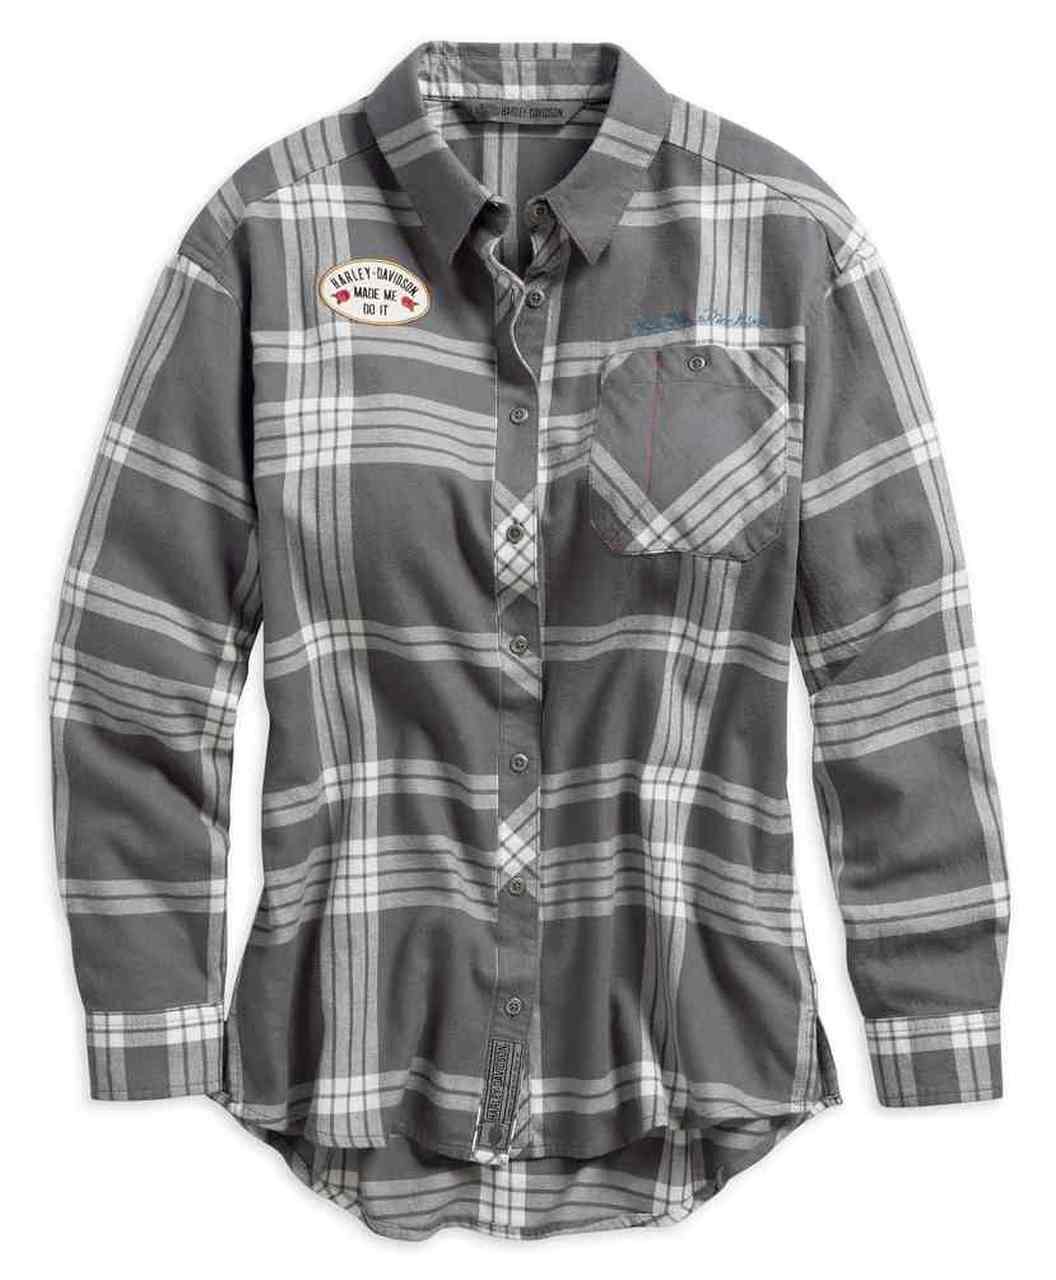 Harley-Davidson® Women’s Eagle Graphic Plaid Long Sleeve Shirt, Gray